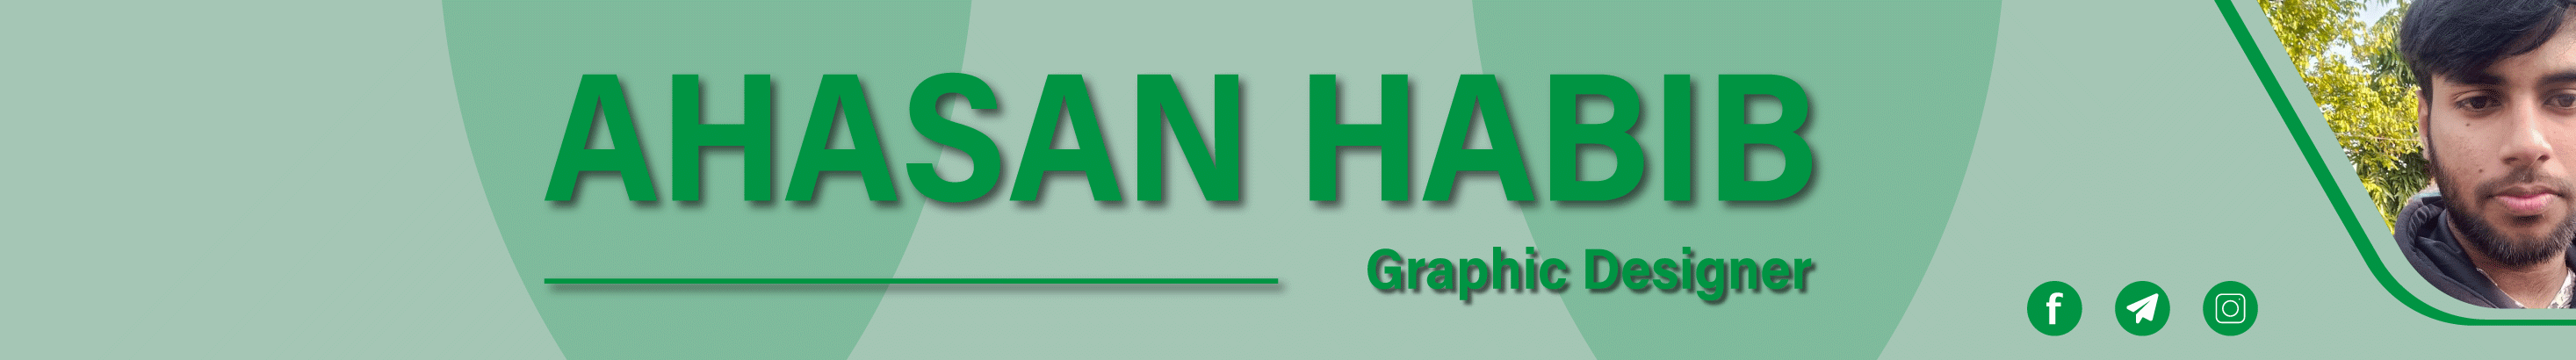 Design Store (Ahasan Habib)'s profile banner